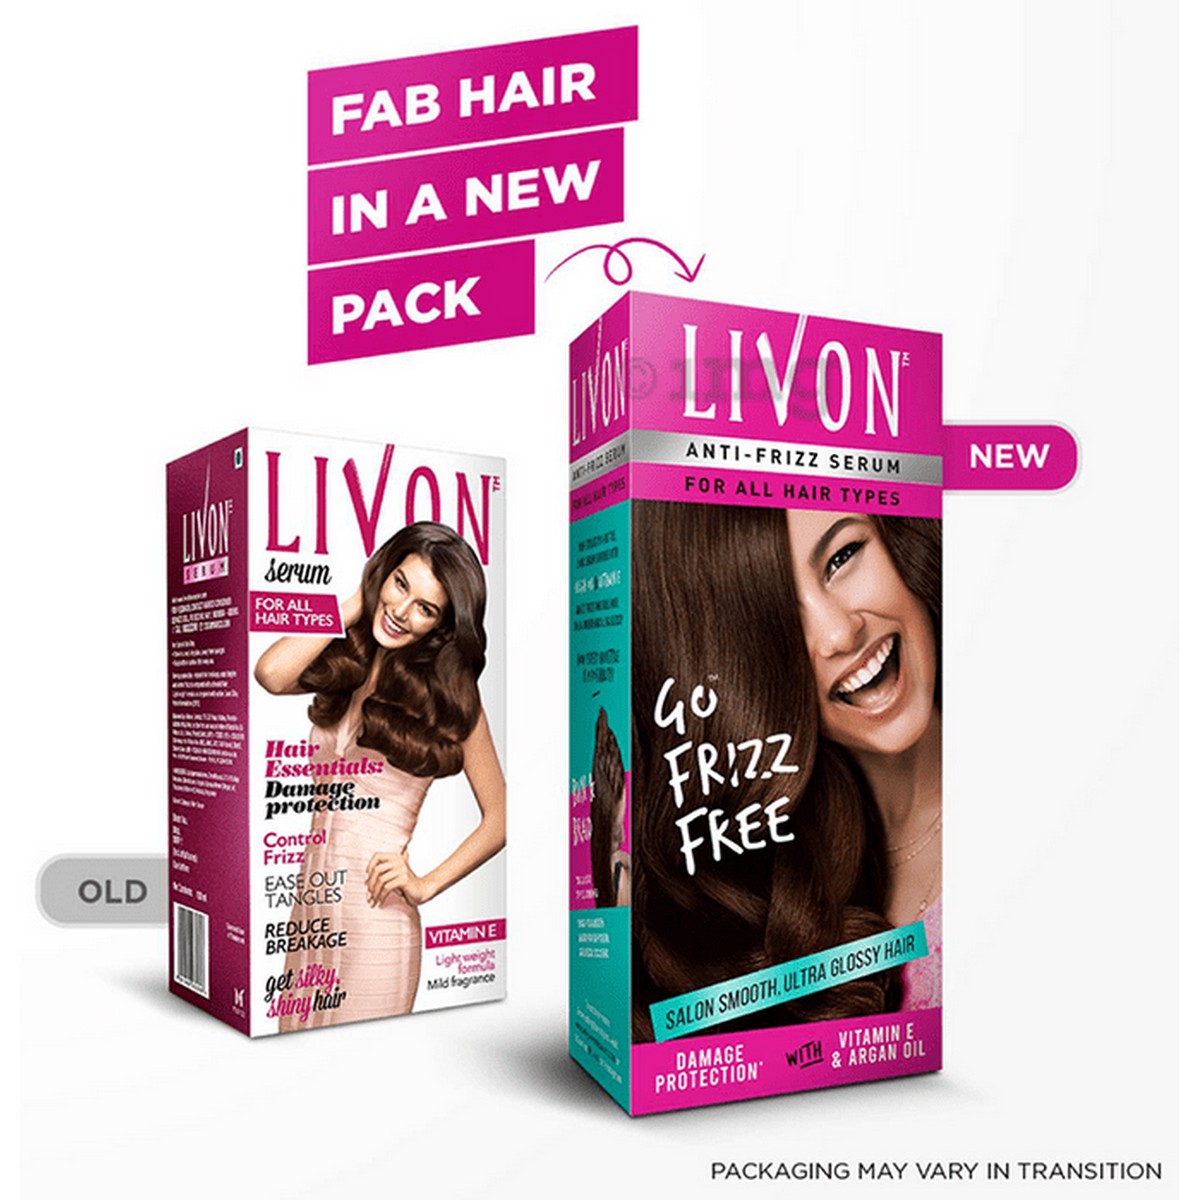 Livon AntiFrizz Serum for All Hair Types 100ml in Varanasi at best price  by Binu Bhai Cosmetics  Justdial